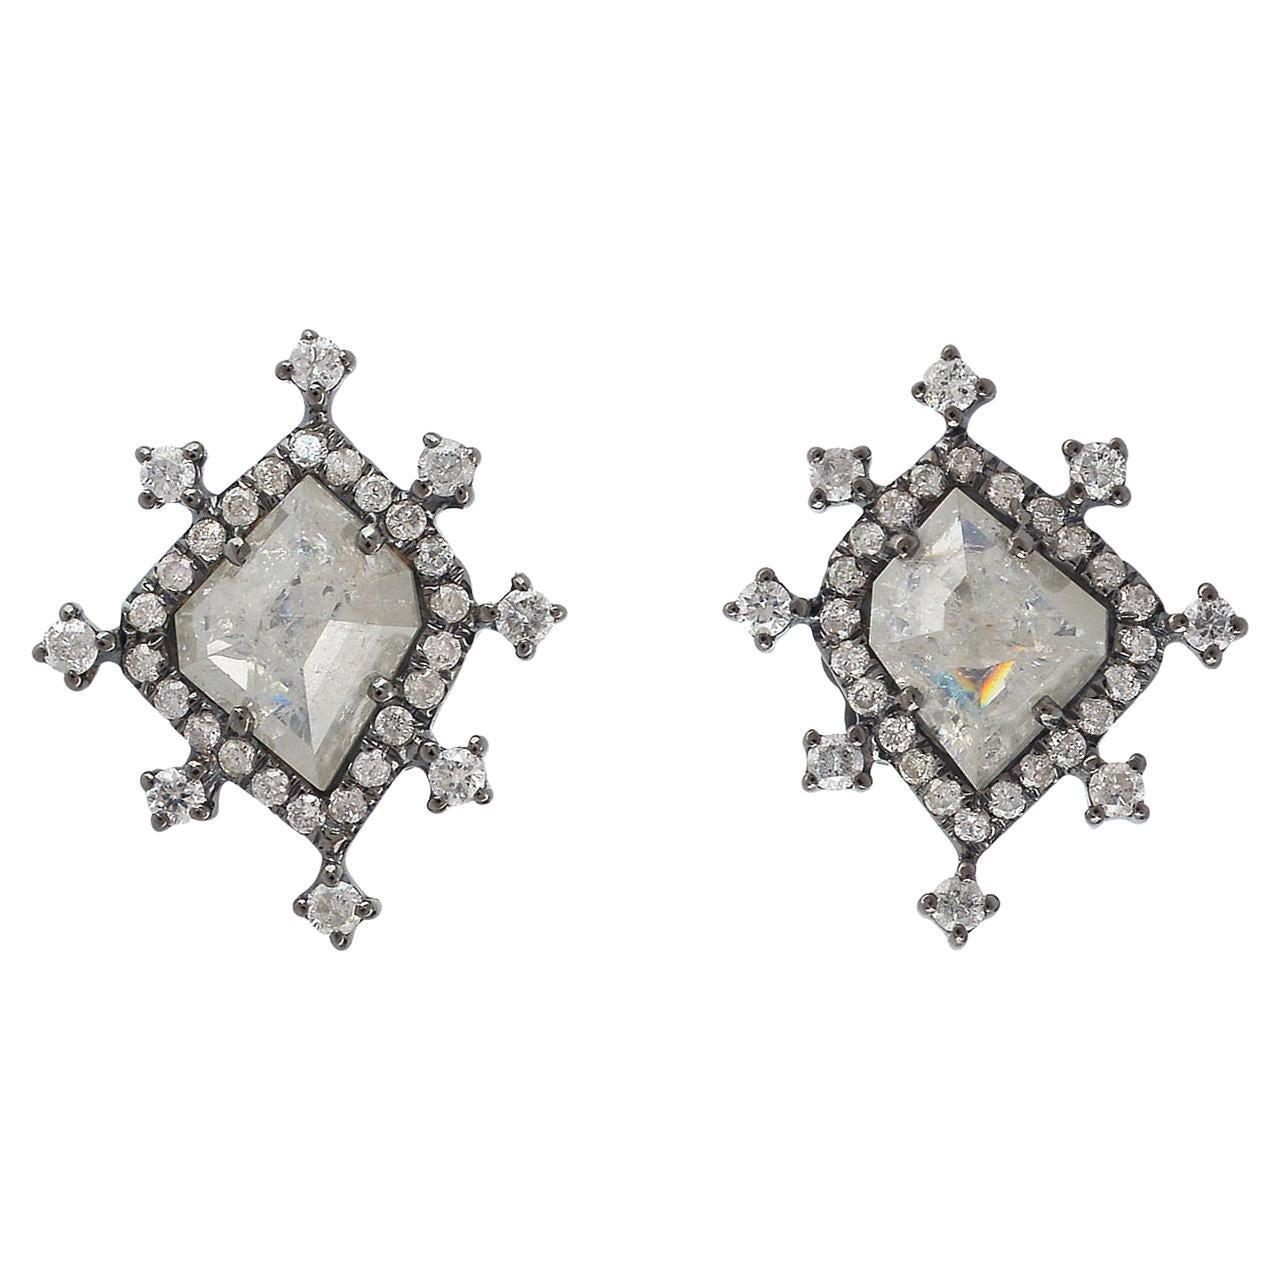 Organic Shaped Ice Diamonds Studs Made In 18k White Gold